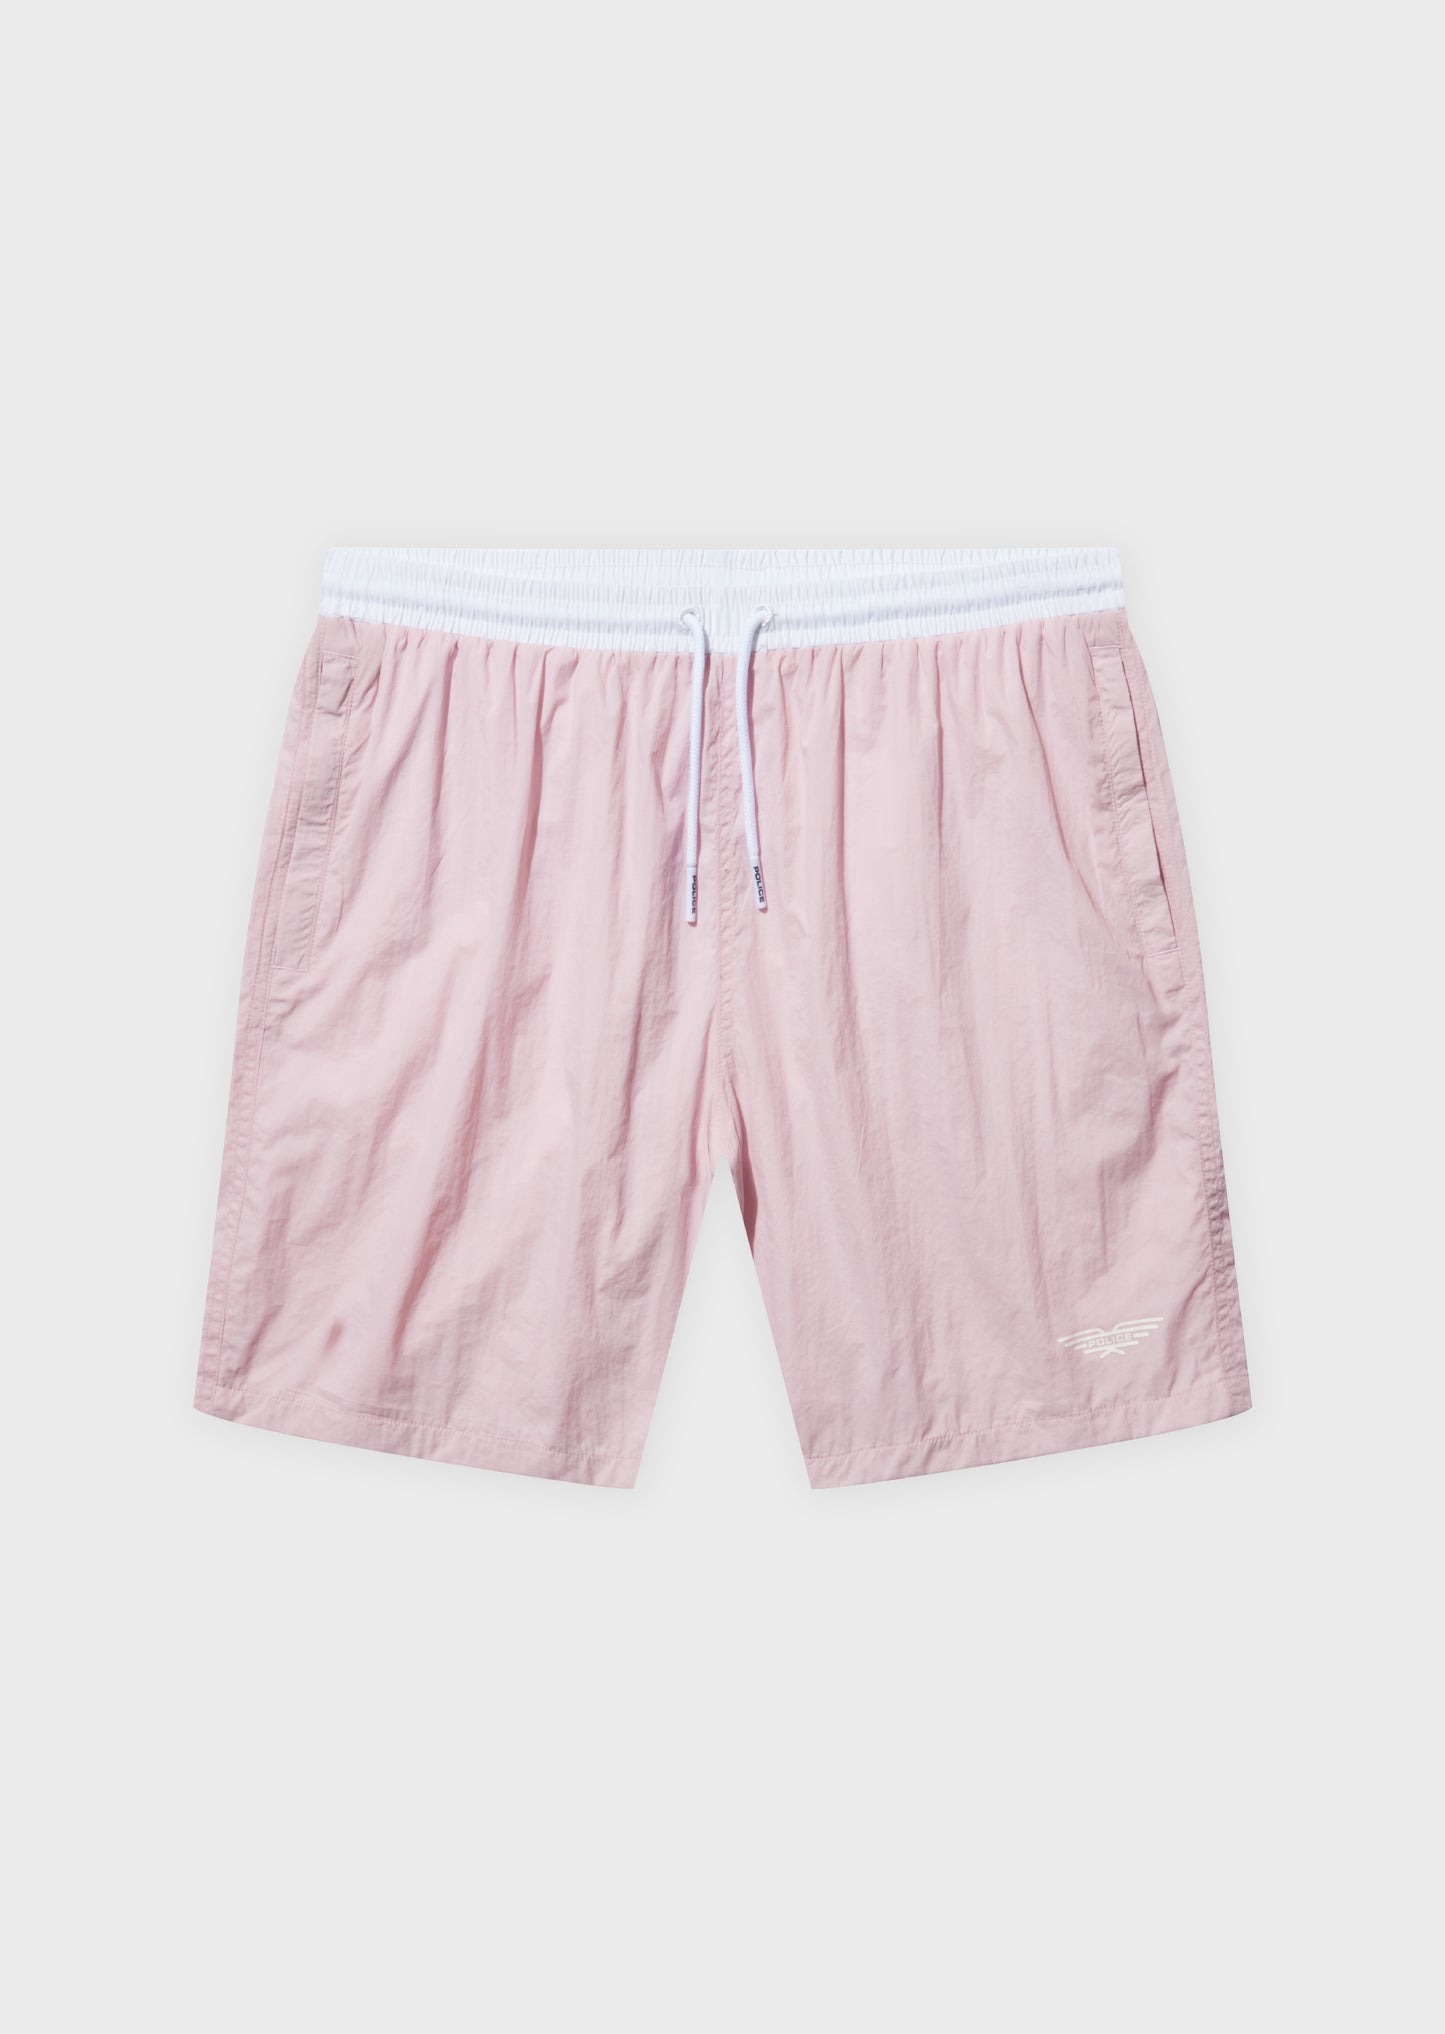 Raldon Soft Pink Swimshorts